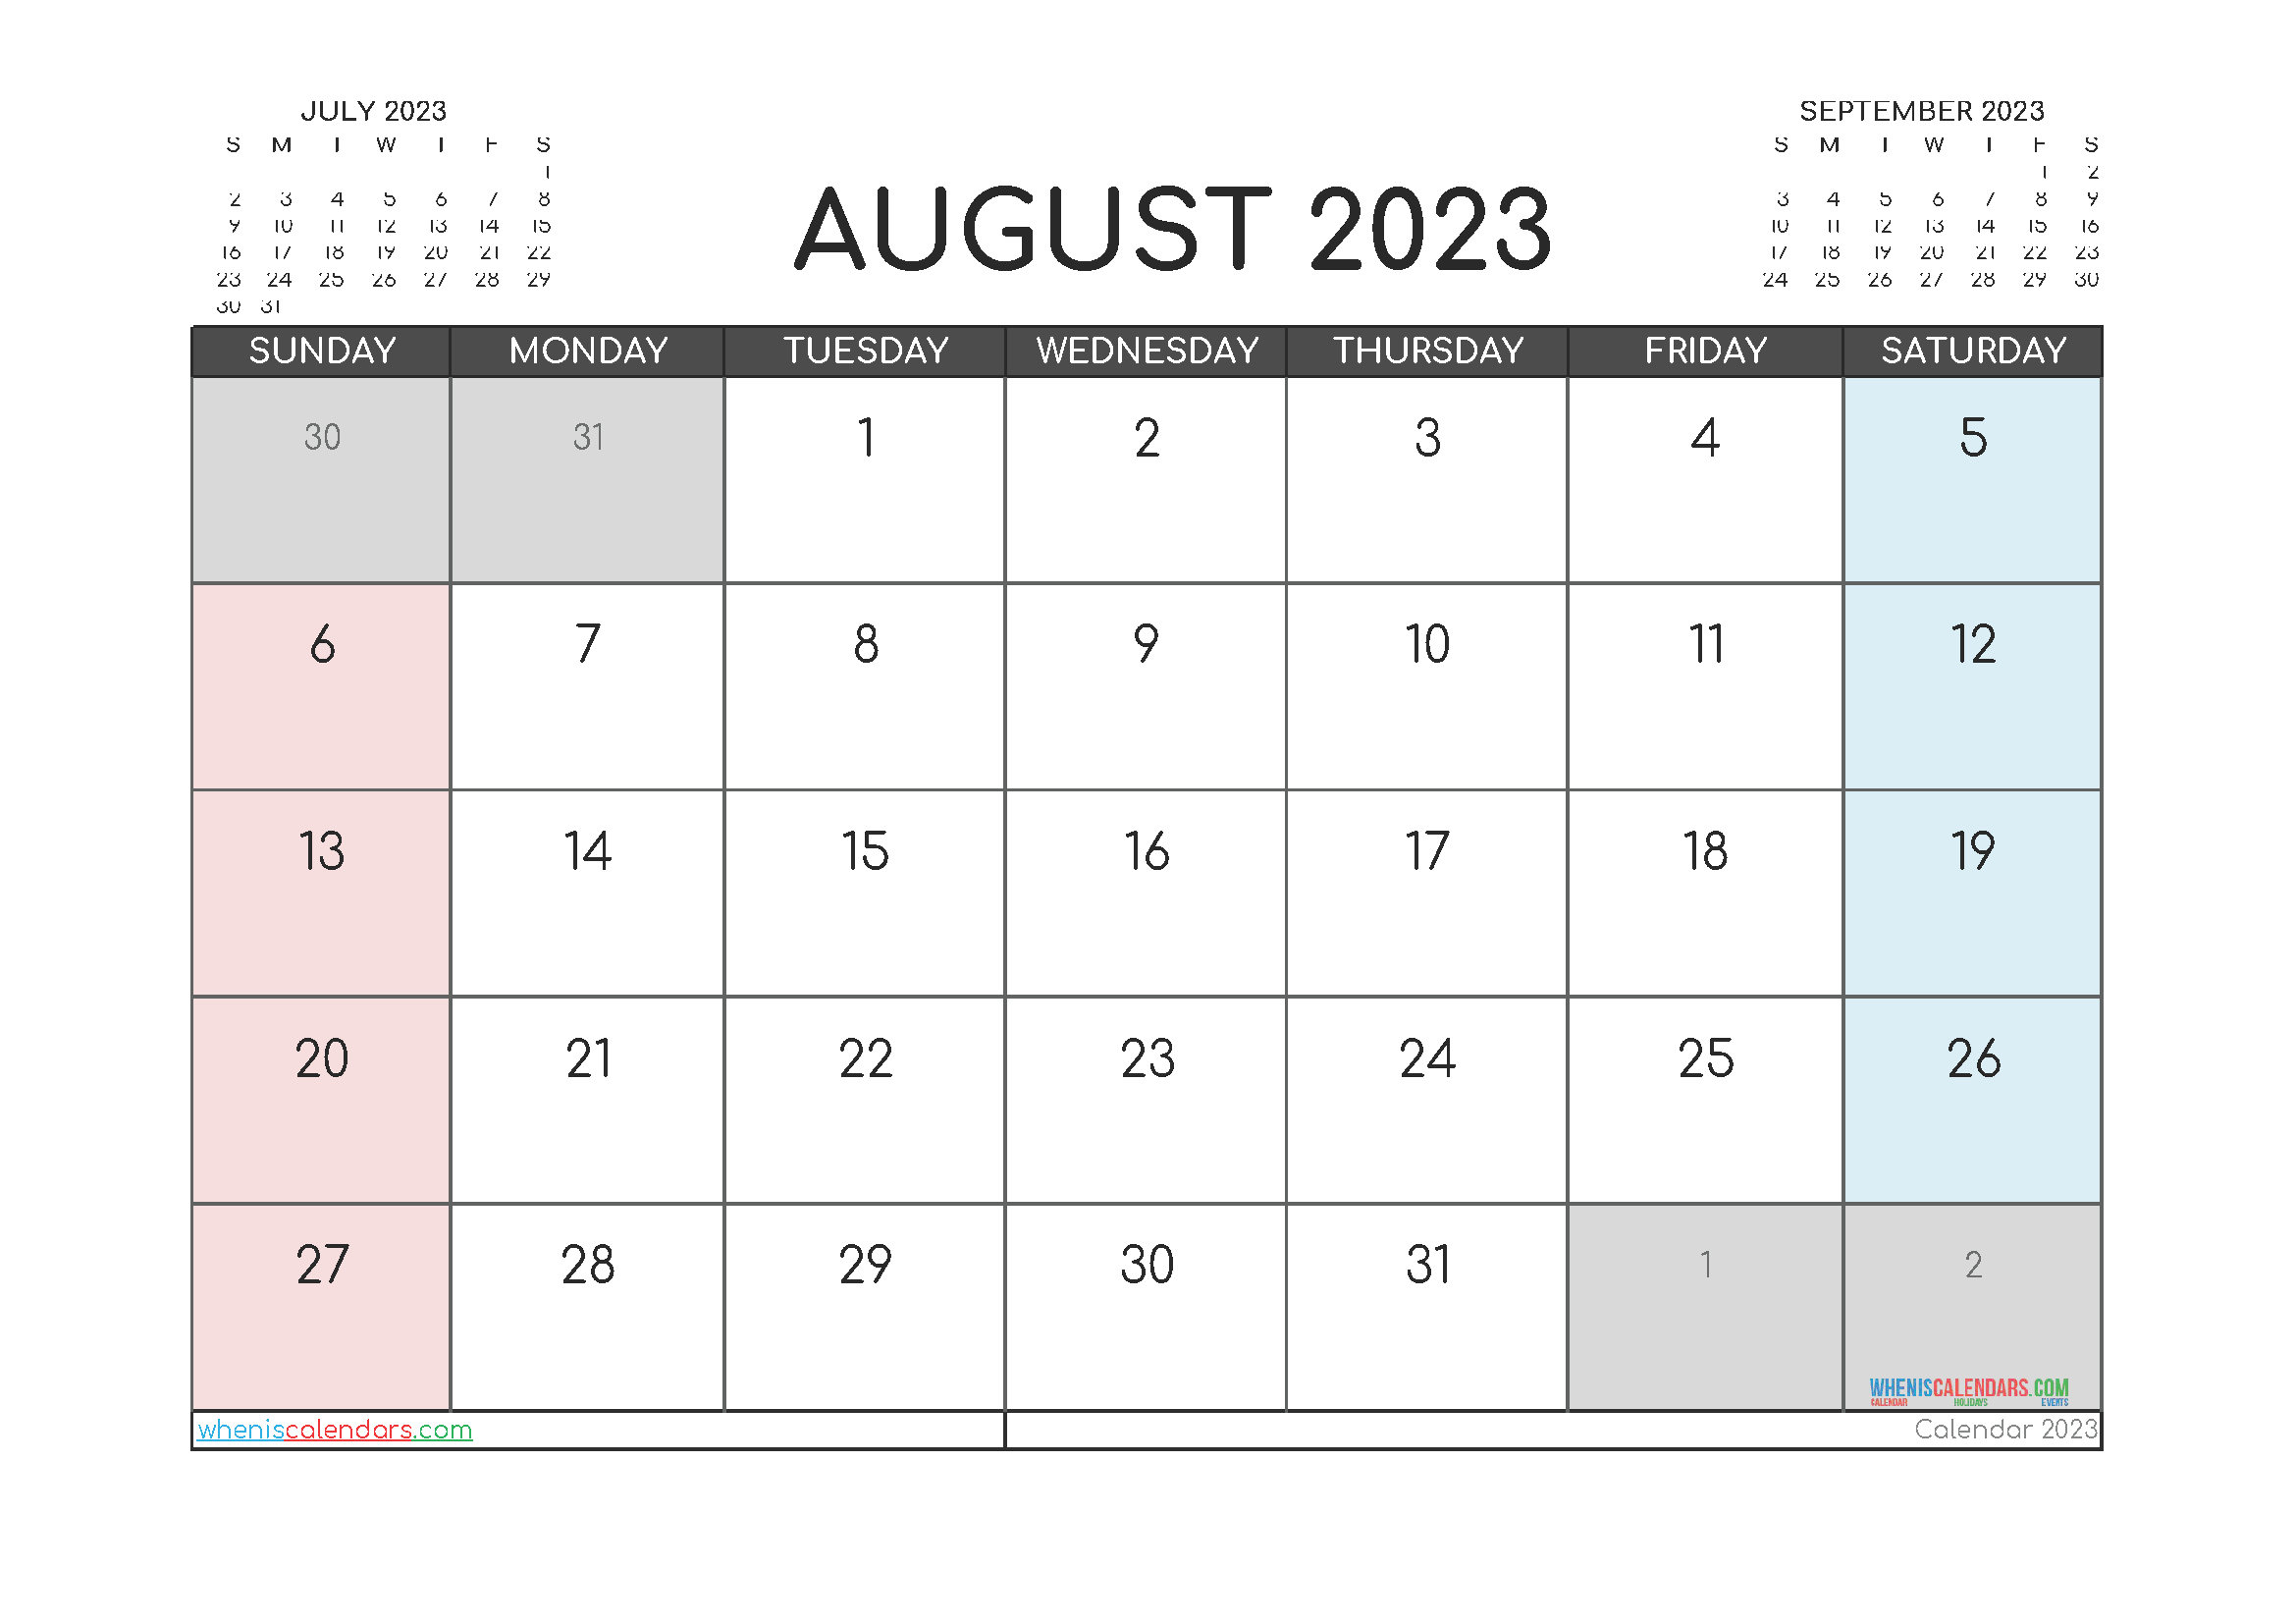 August 2023 Calendar Printable Free